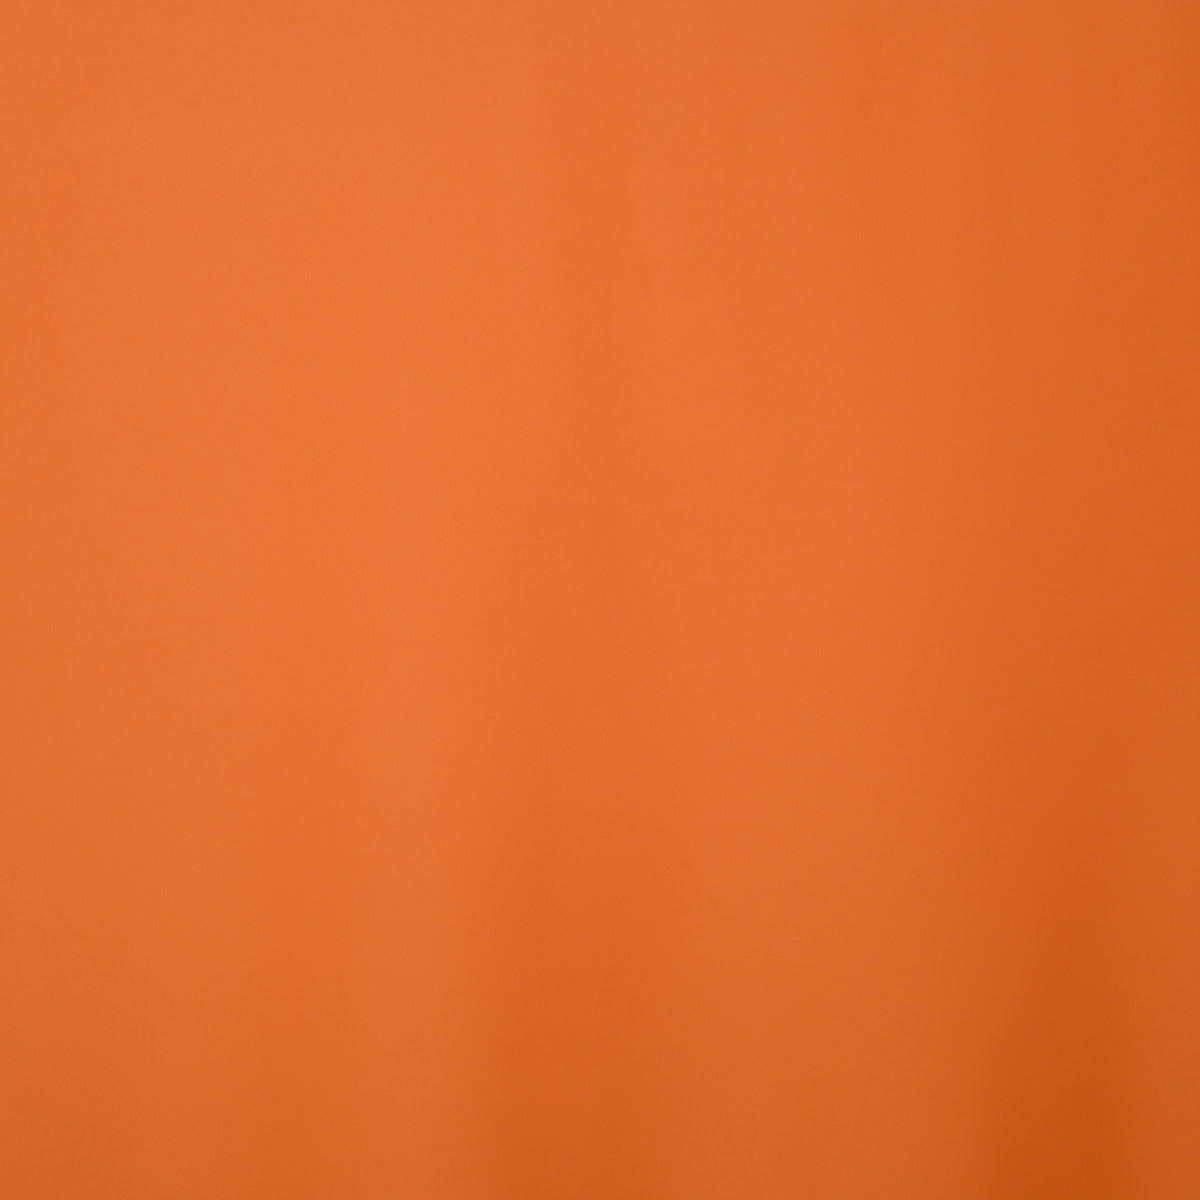 Blackout curtain orange Matteo